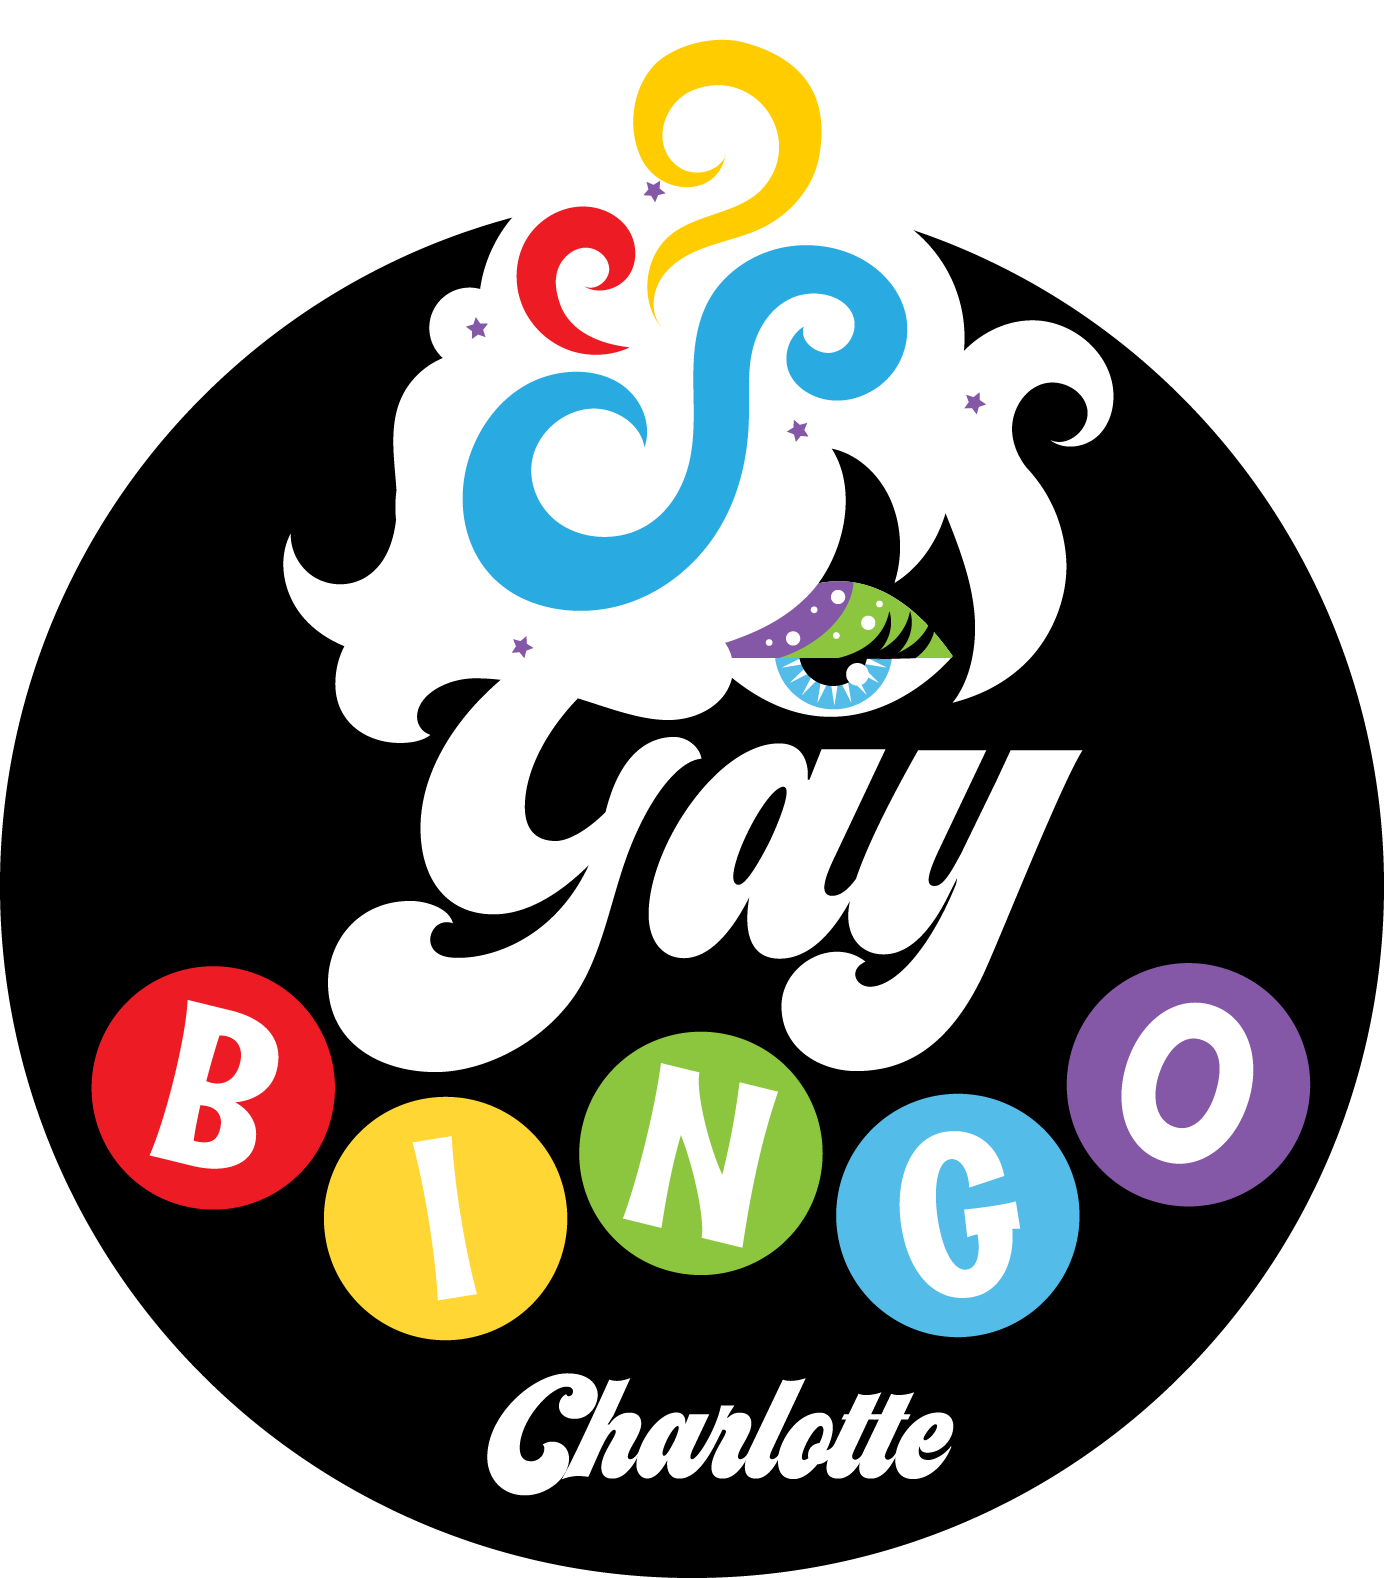 GayBingoLogoColor.png